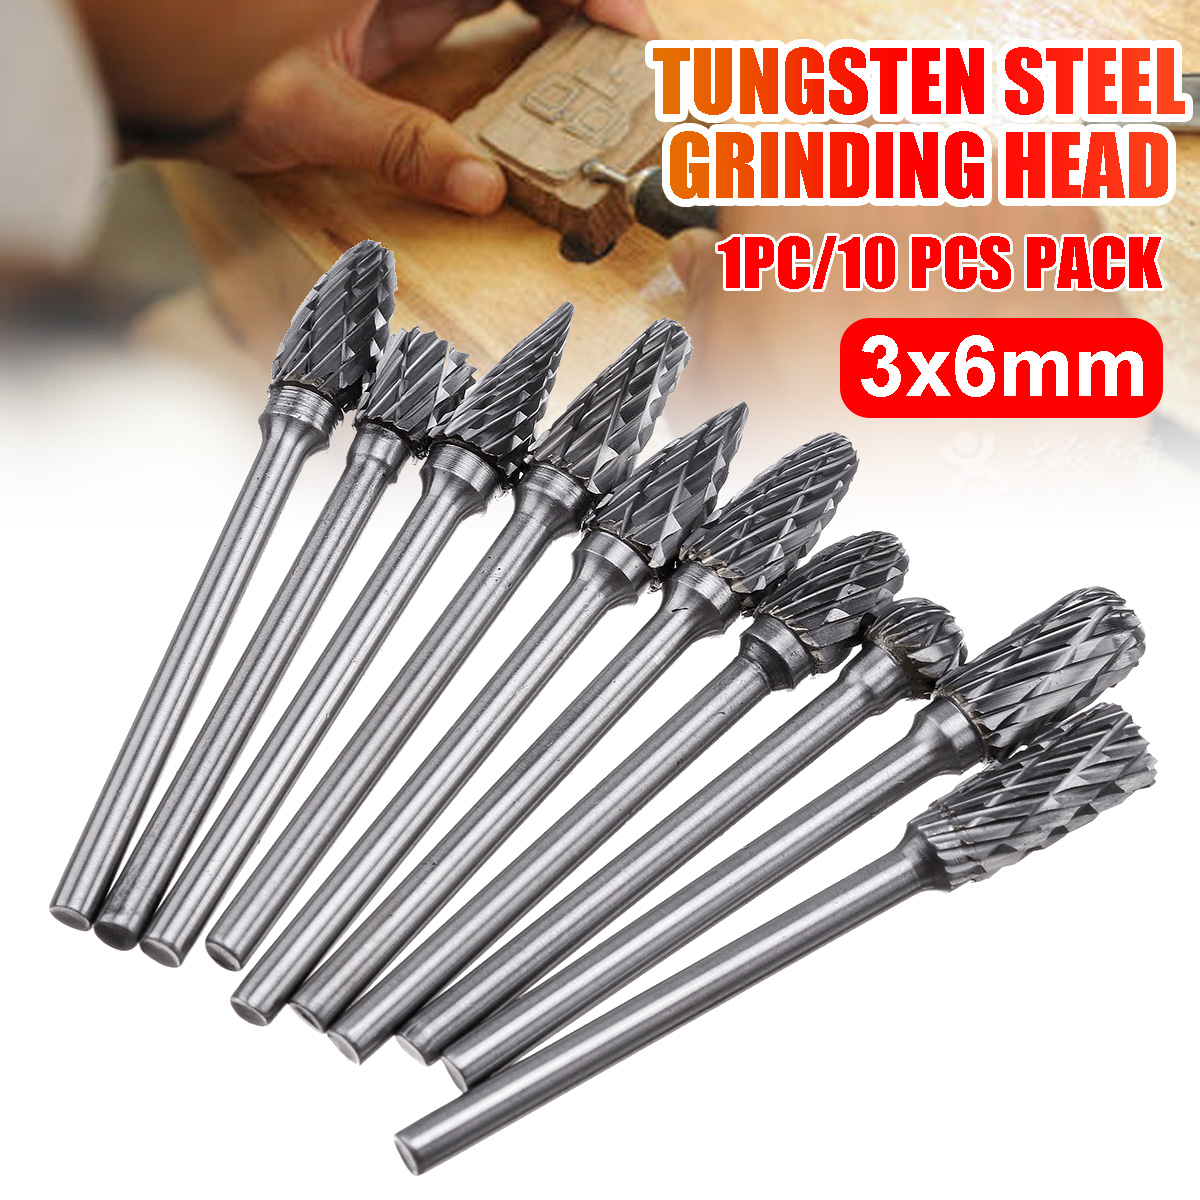 3x6mm-Double-Grain-Tungsten-Steel-Grinding-Head-Rotary-Burr-Drill-Bit-Milling-Cutter-Head-1716221-1